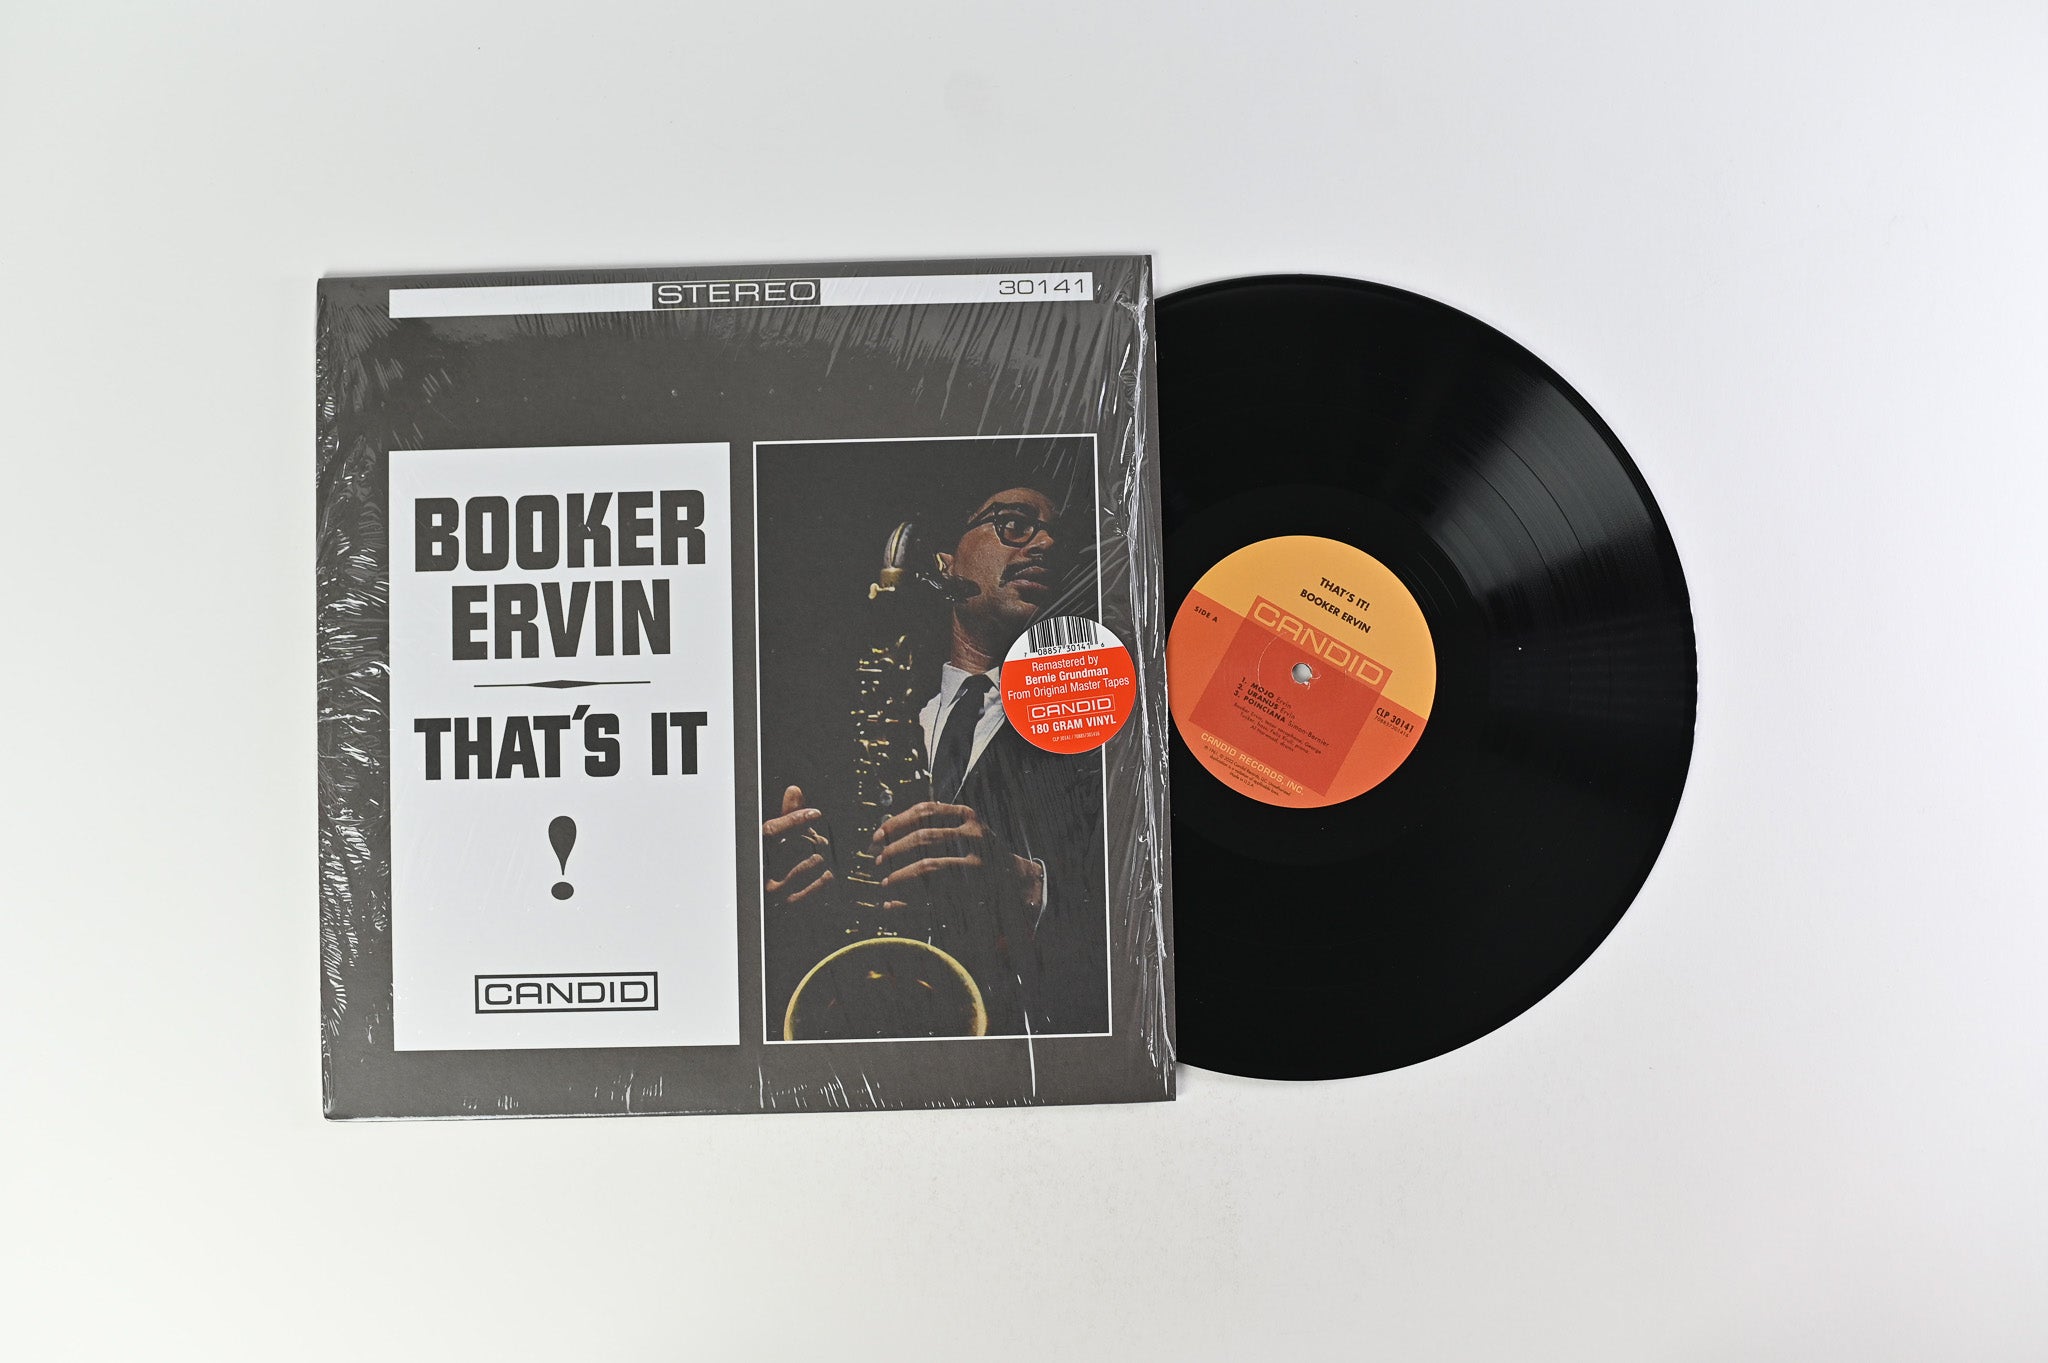 Booker Ervin - That's It! on Candid 180 Gram Reissue